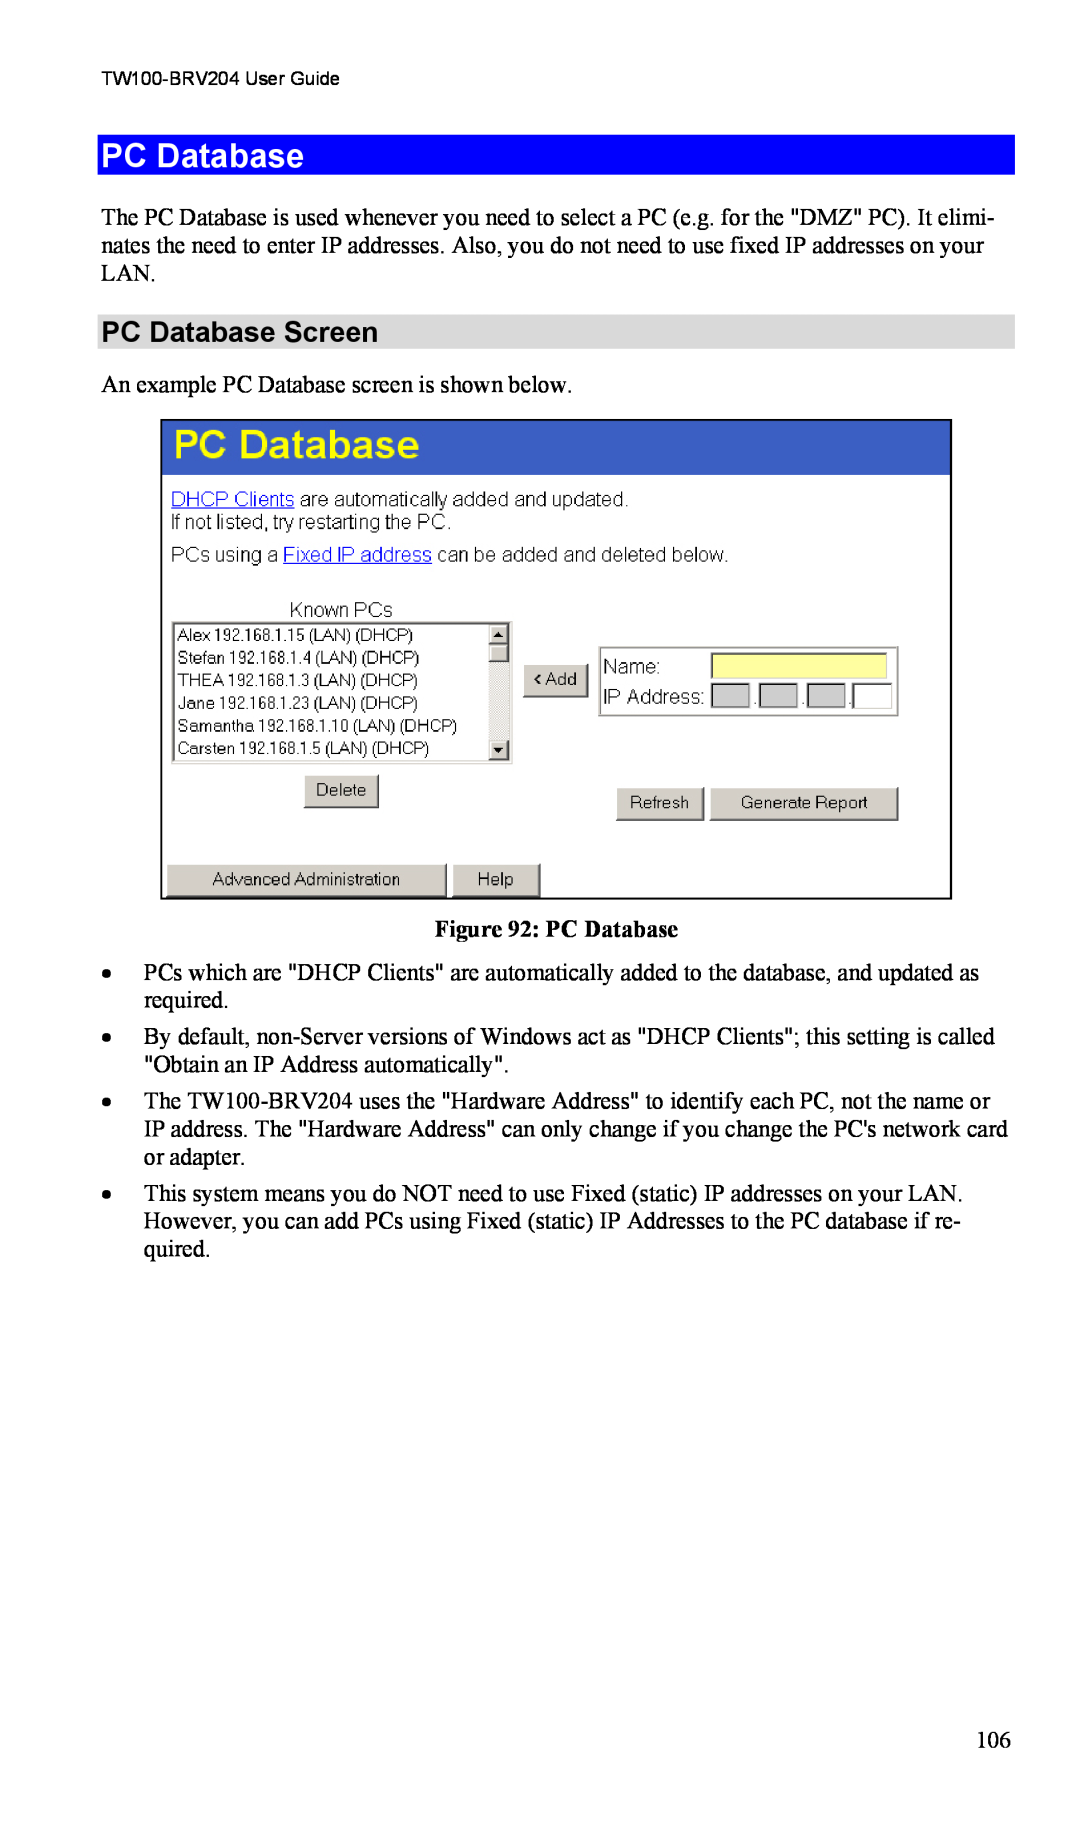 TRENDnet VPN Firewall Router, TW100-BRV204 manual PC Database Screen 